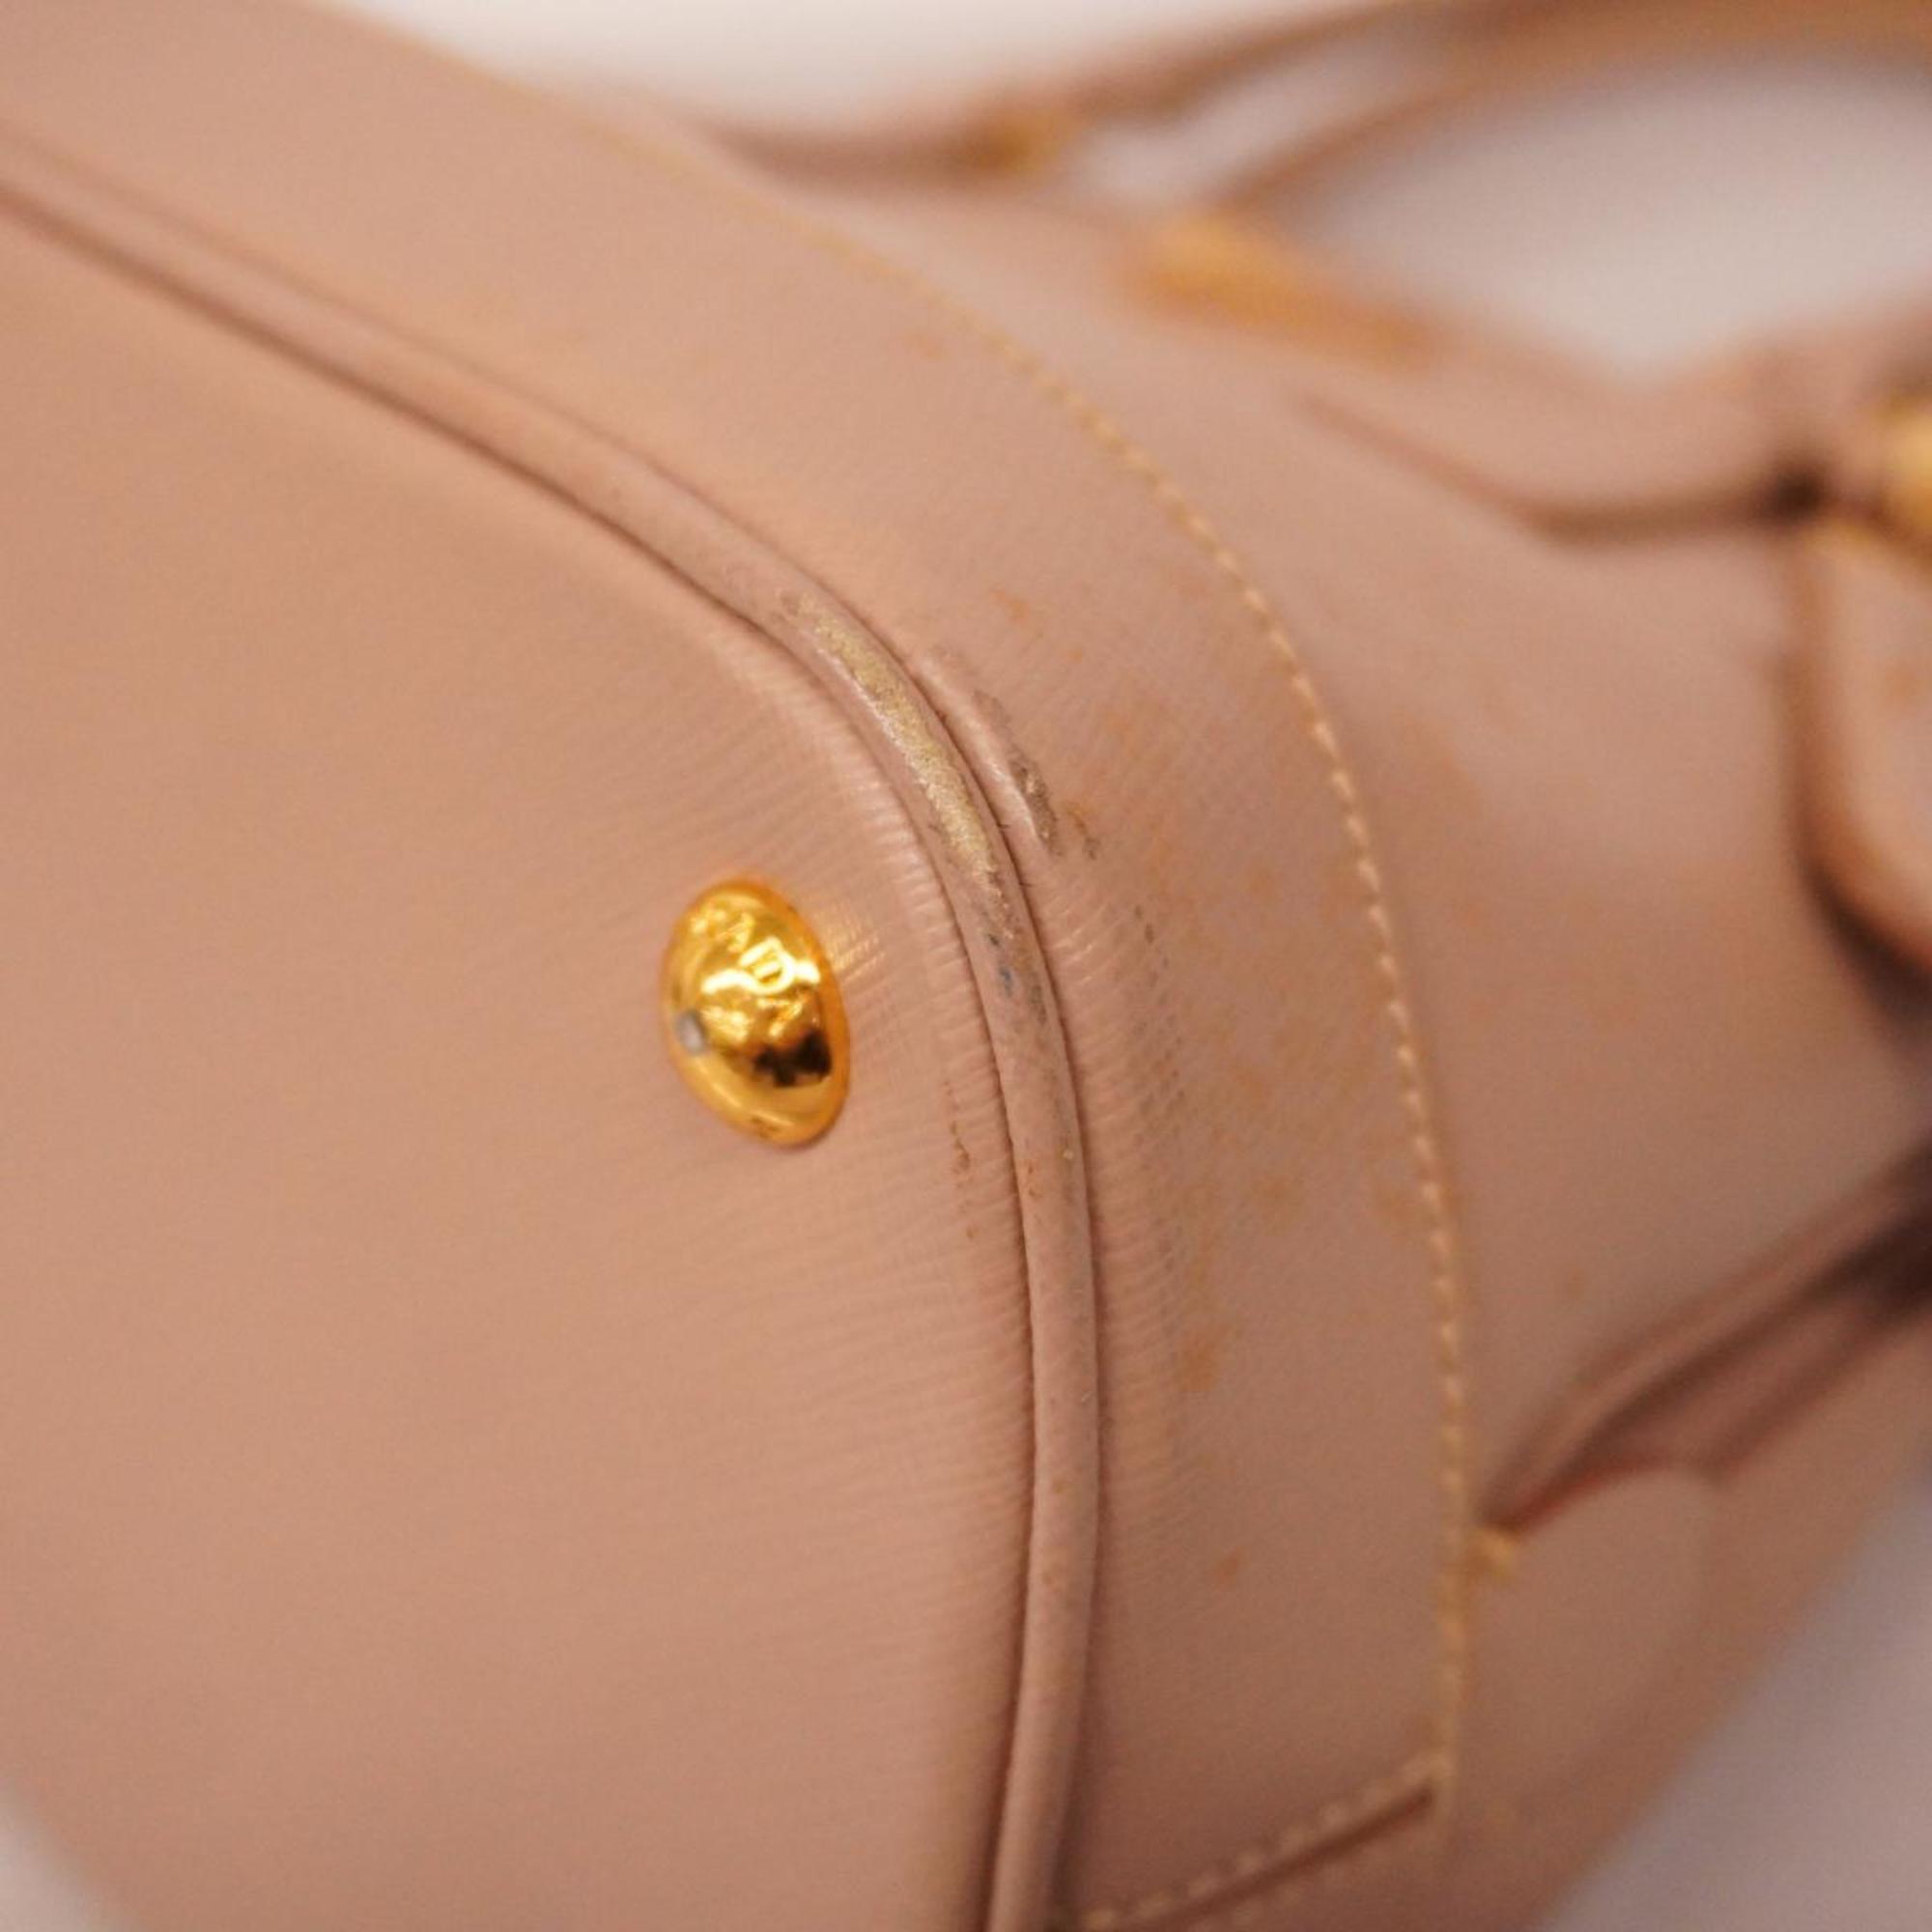 Prada handbag saffiano leather pink ladies